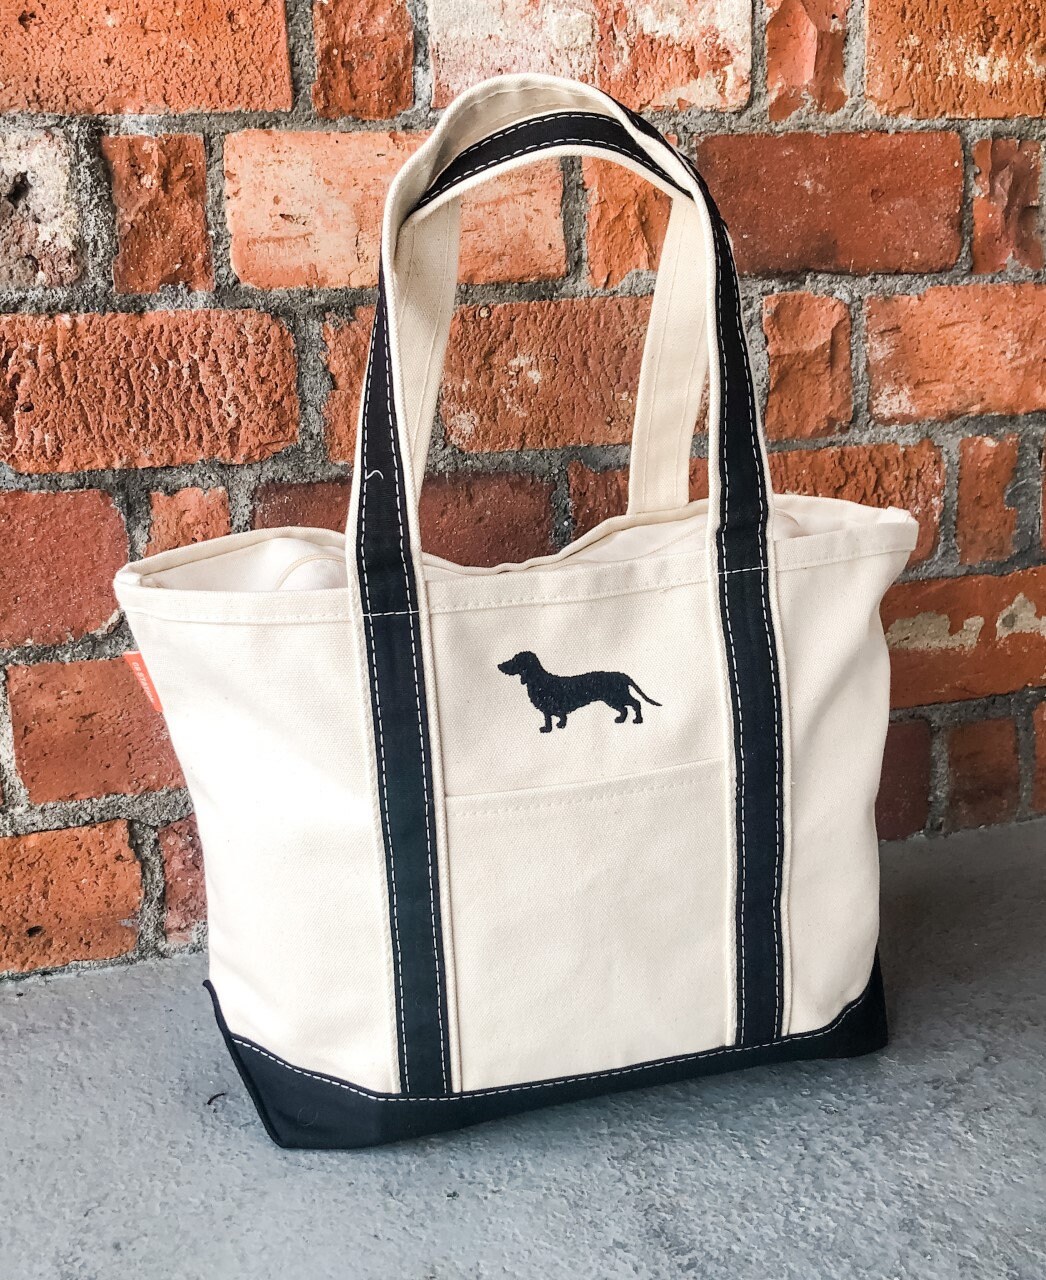 Custom Dog Canvas Tote Bag - Elegant Design 1 Dog / Green